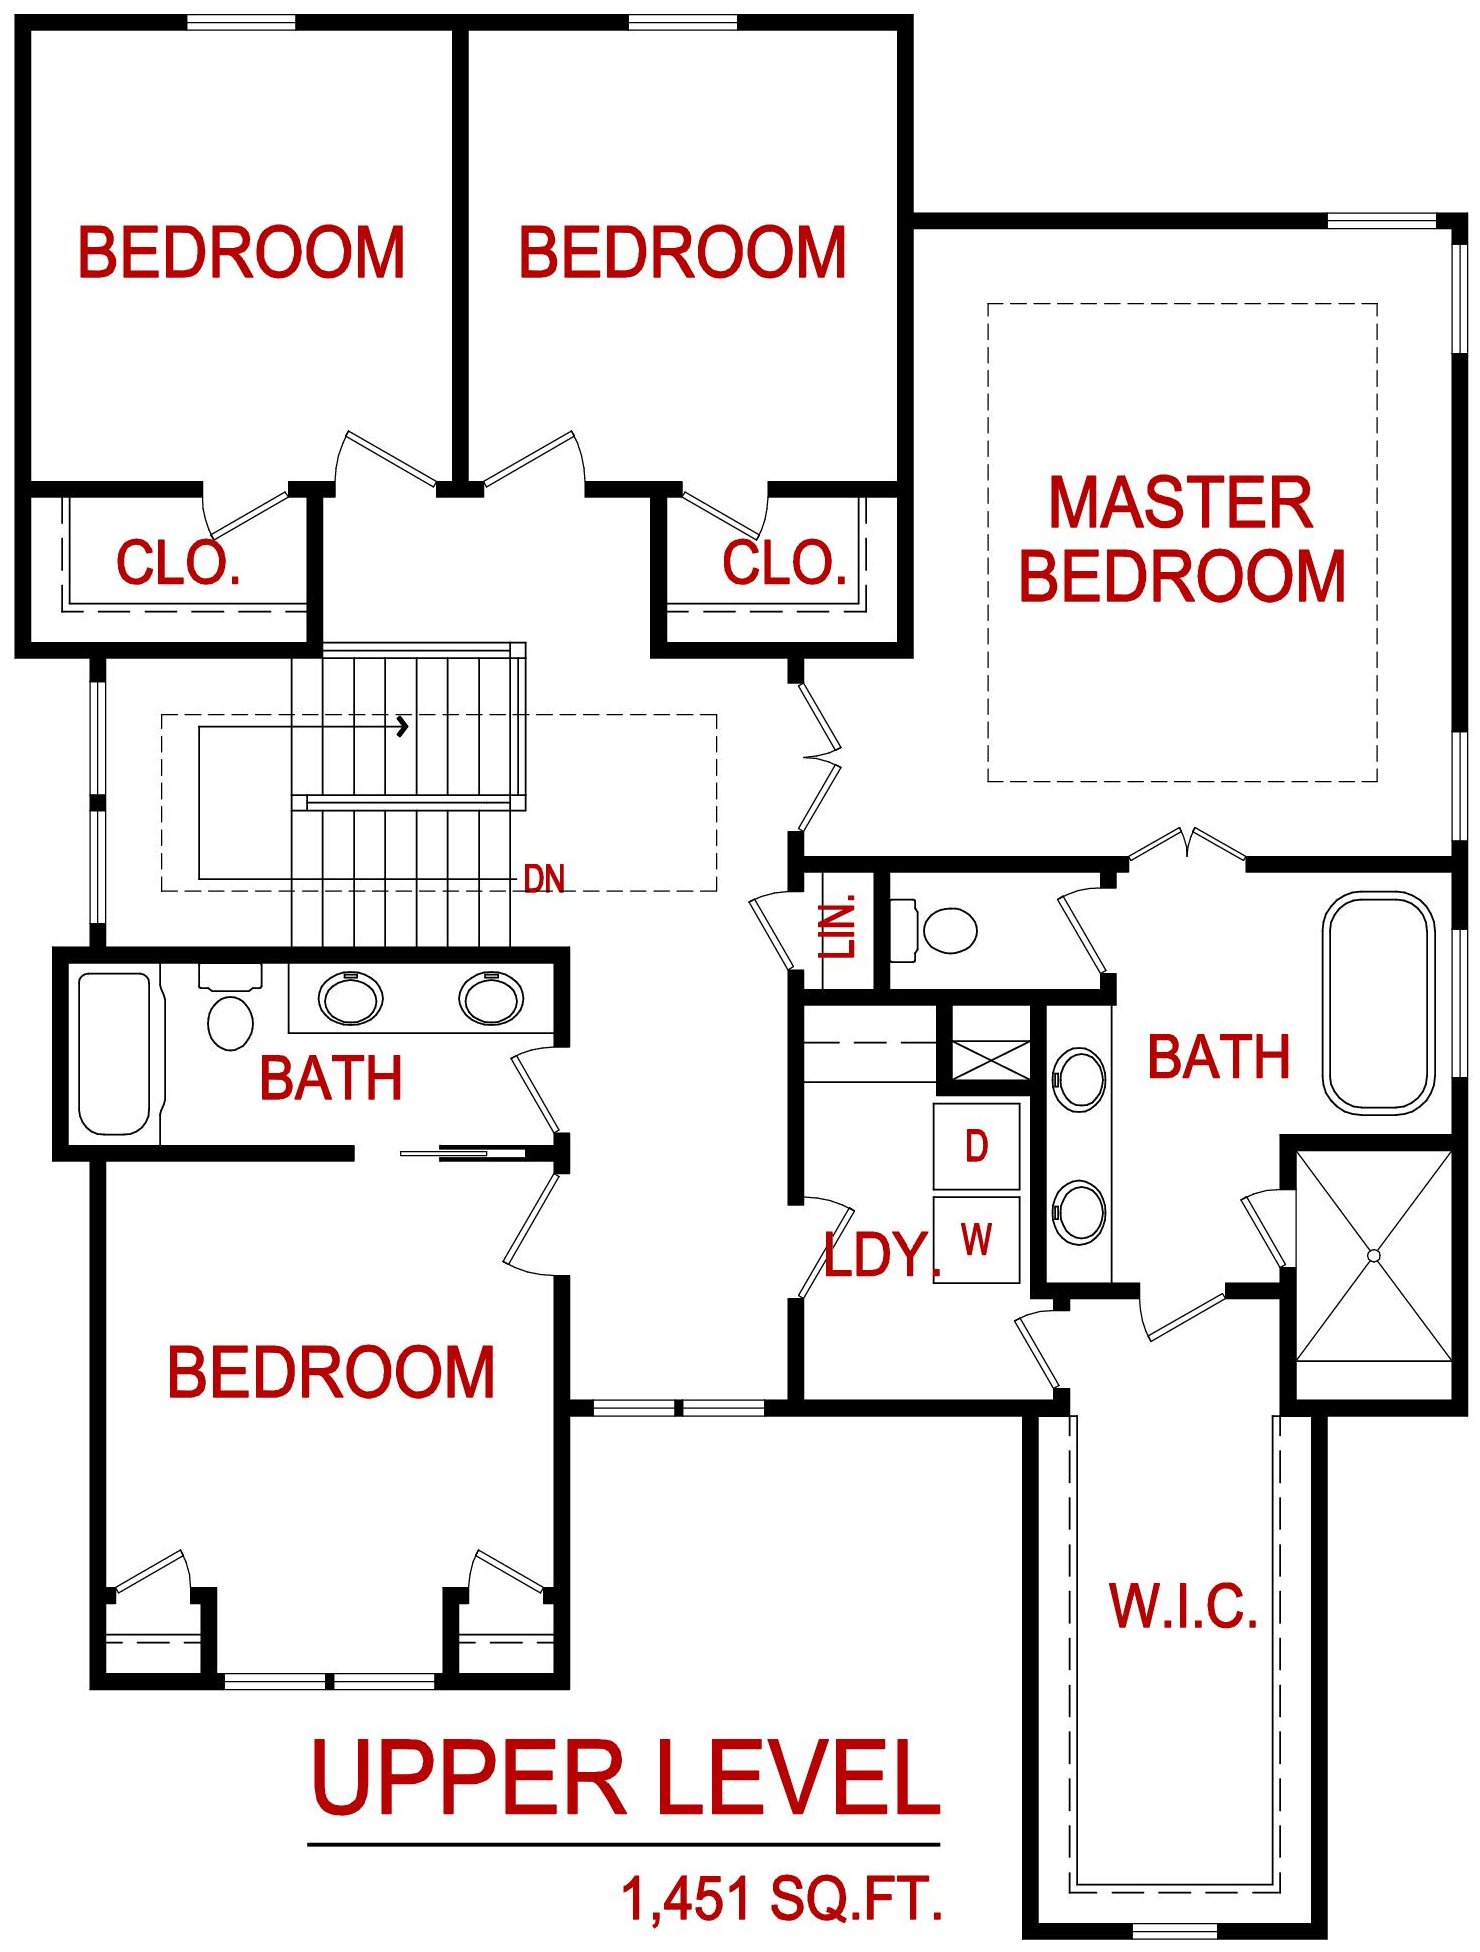 Upper level floor plan for the Ashland Model from Lambie Homes